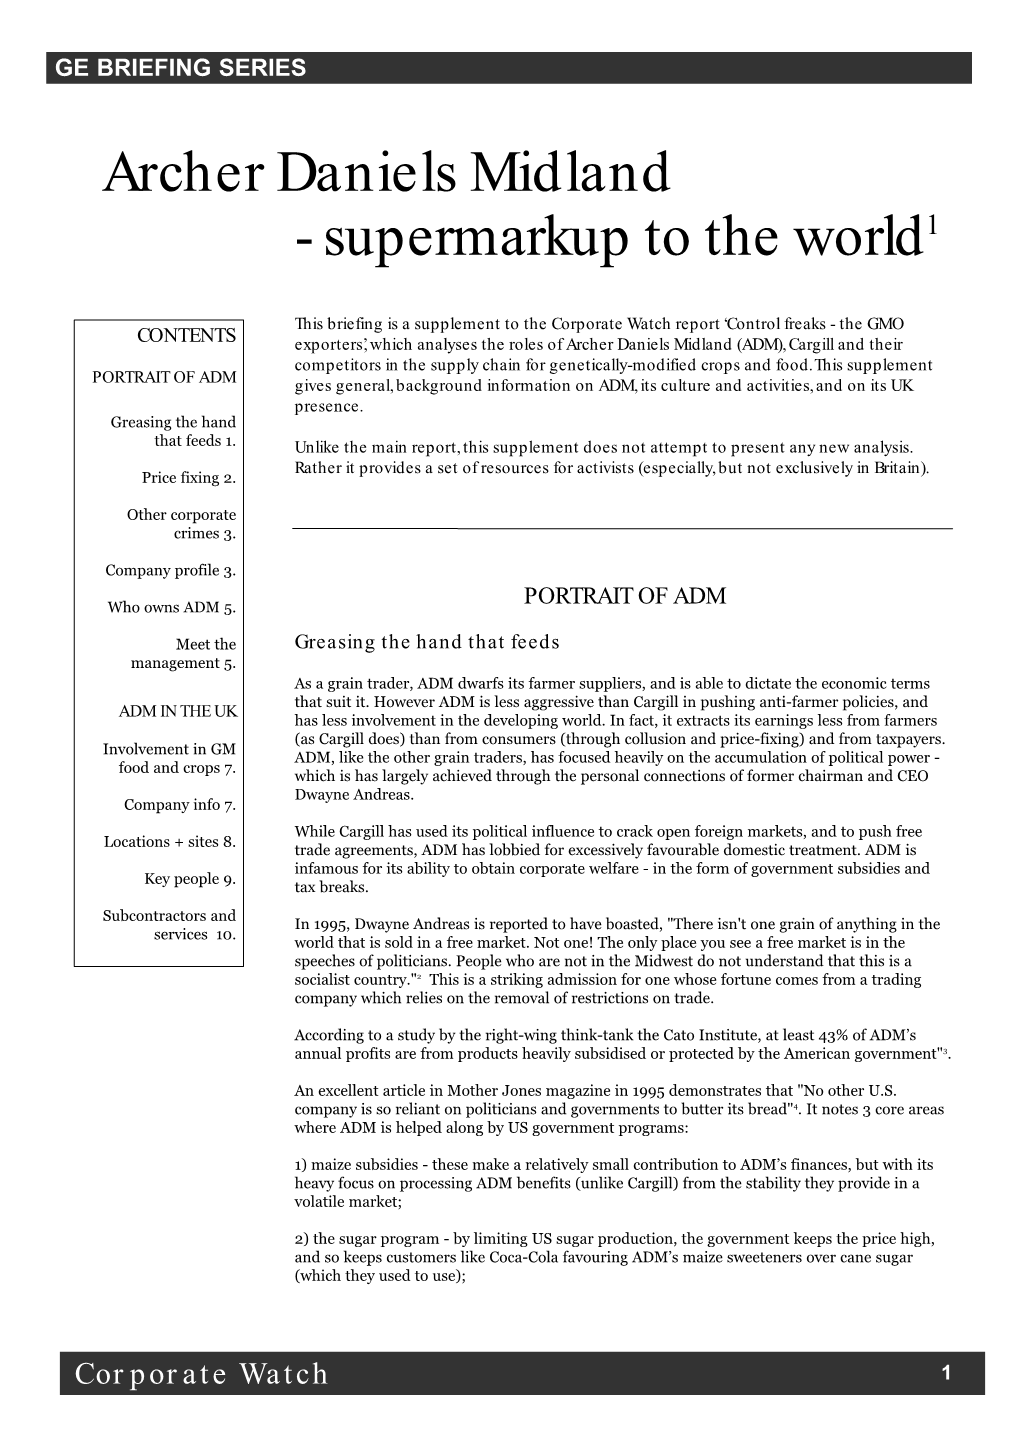 Archer Daniels Midland - Supermarkup to the World1